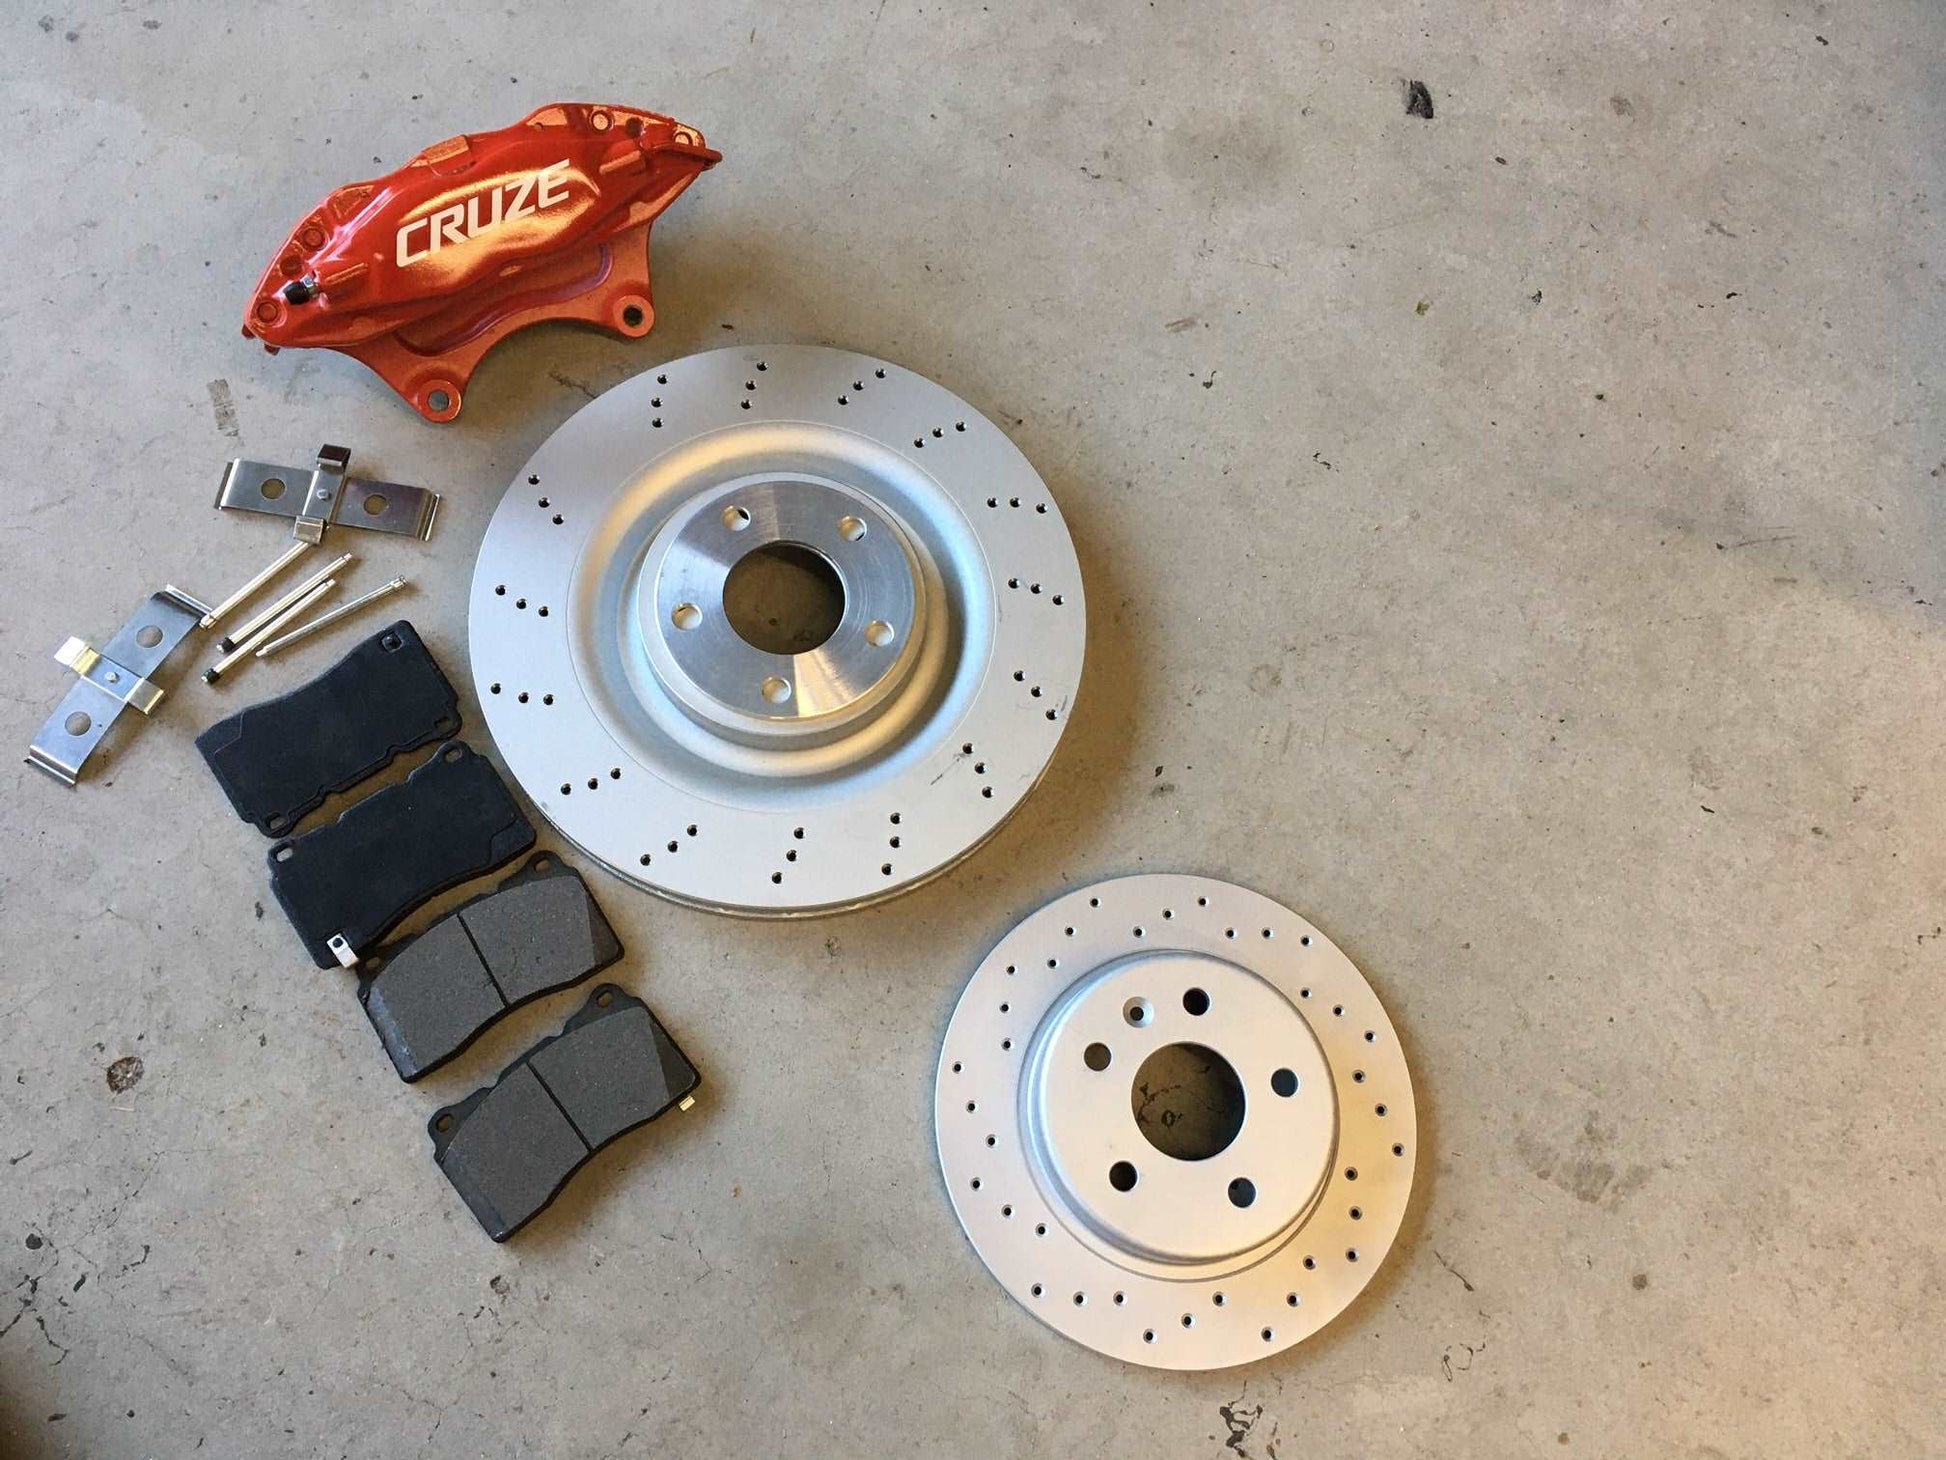 CRUZE / Sonic / Malibu / Equinox brake upgrades